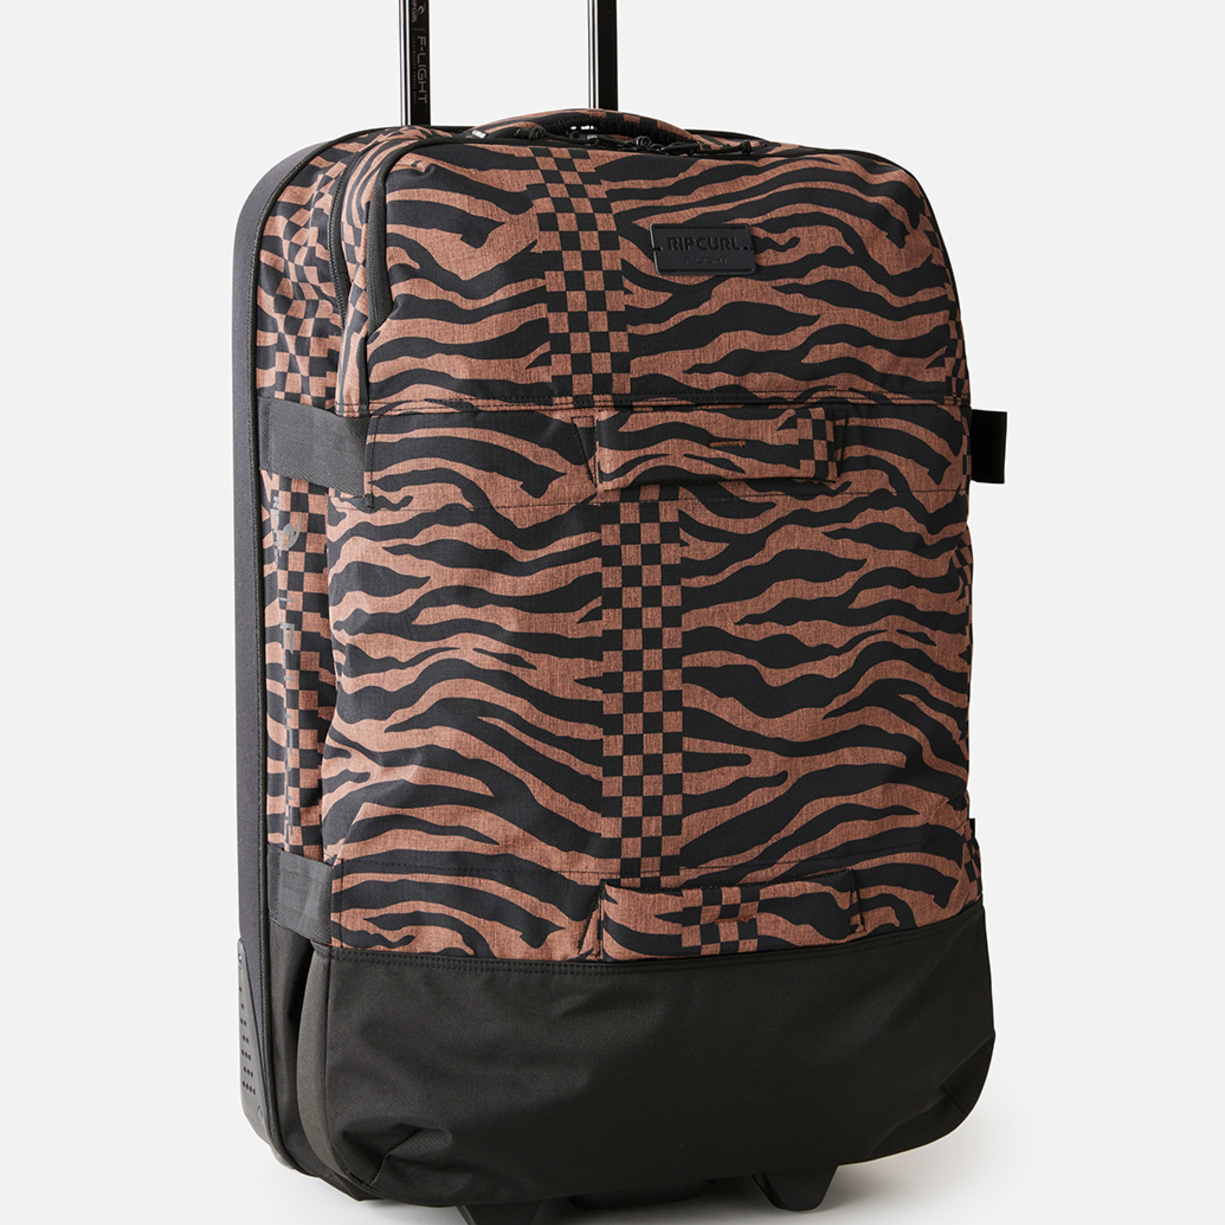 Ripcurl F-Light Global Wheelie Travel Bags